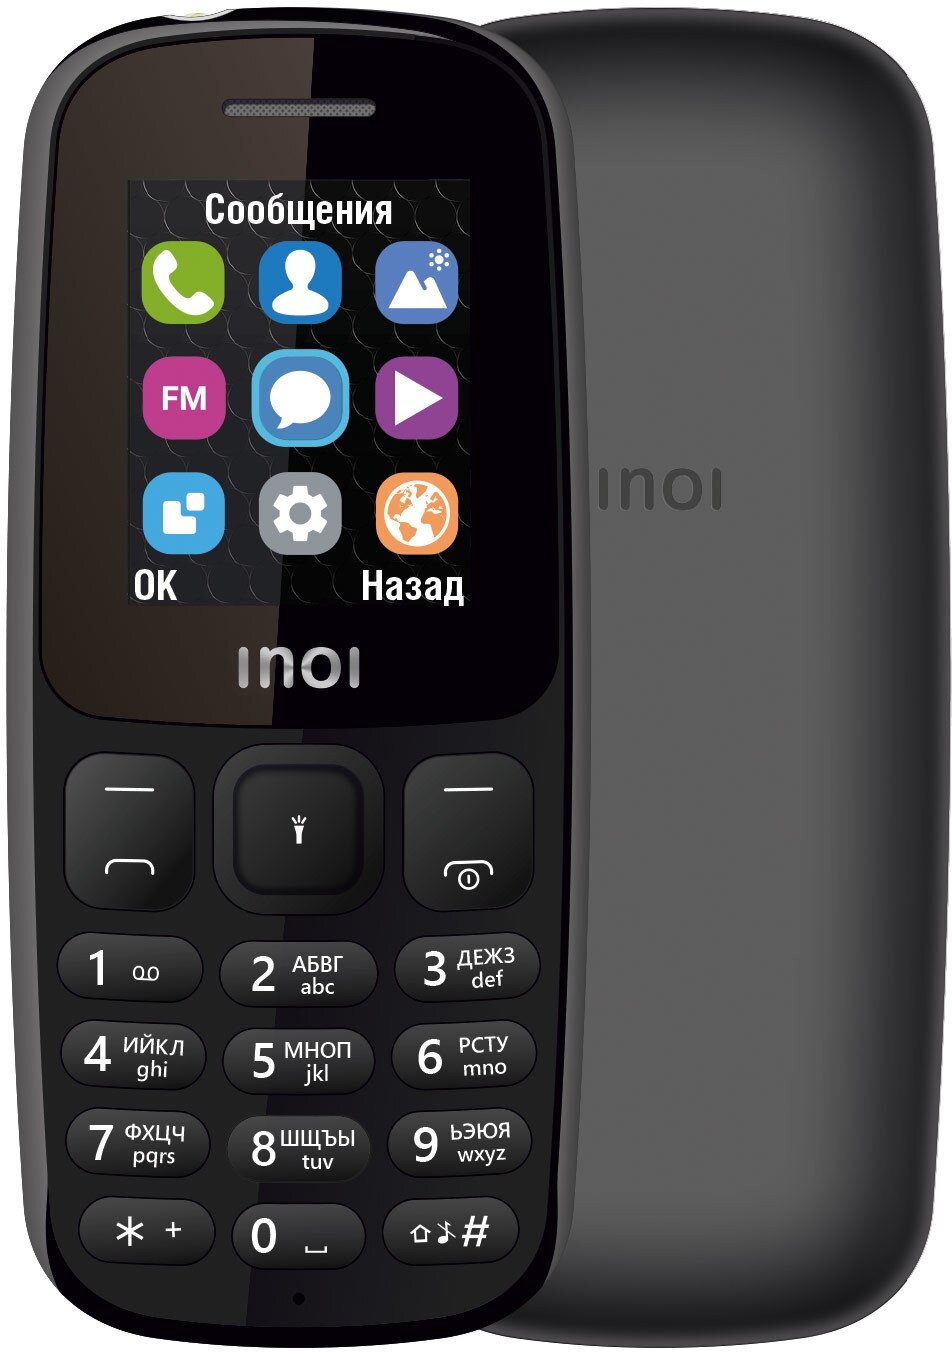 Сотовый телефон Inoi 101 Black